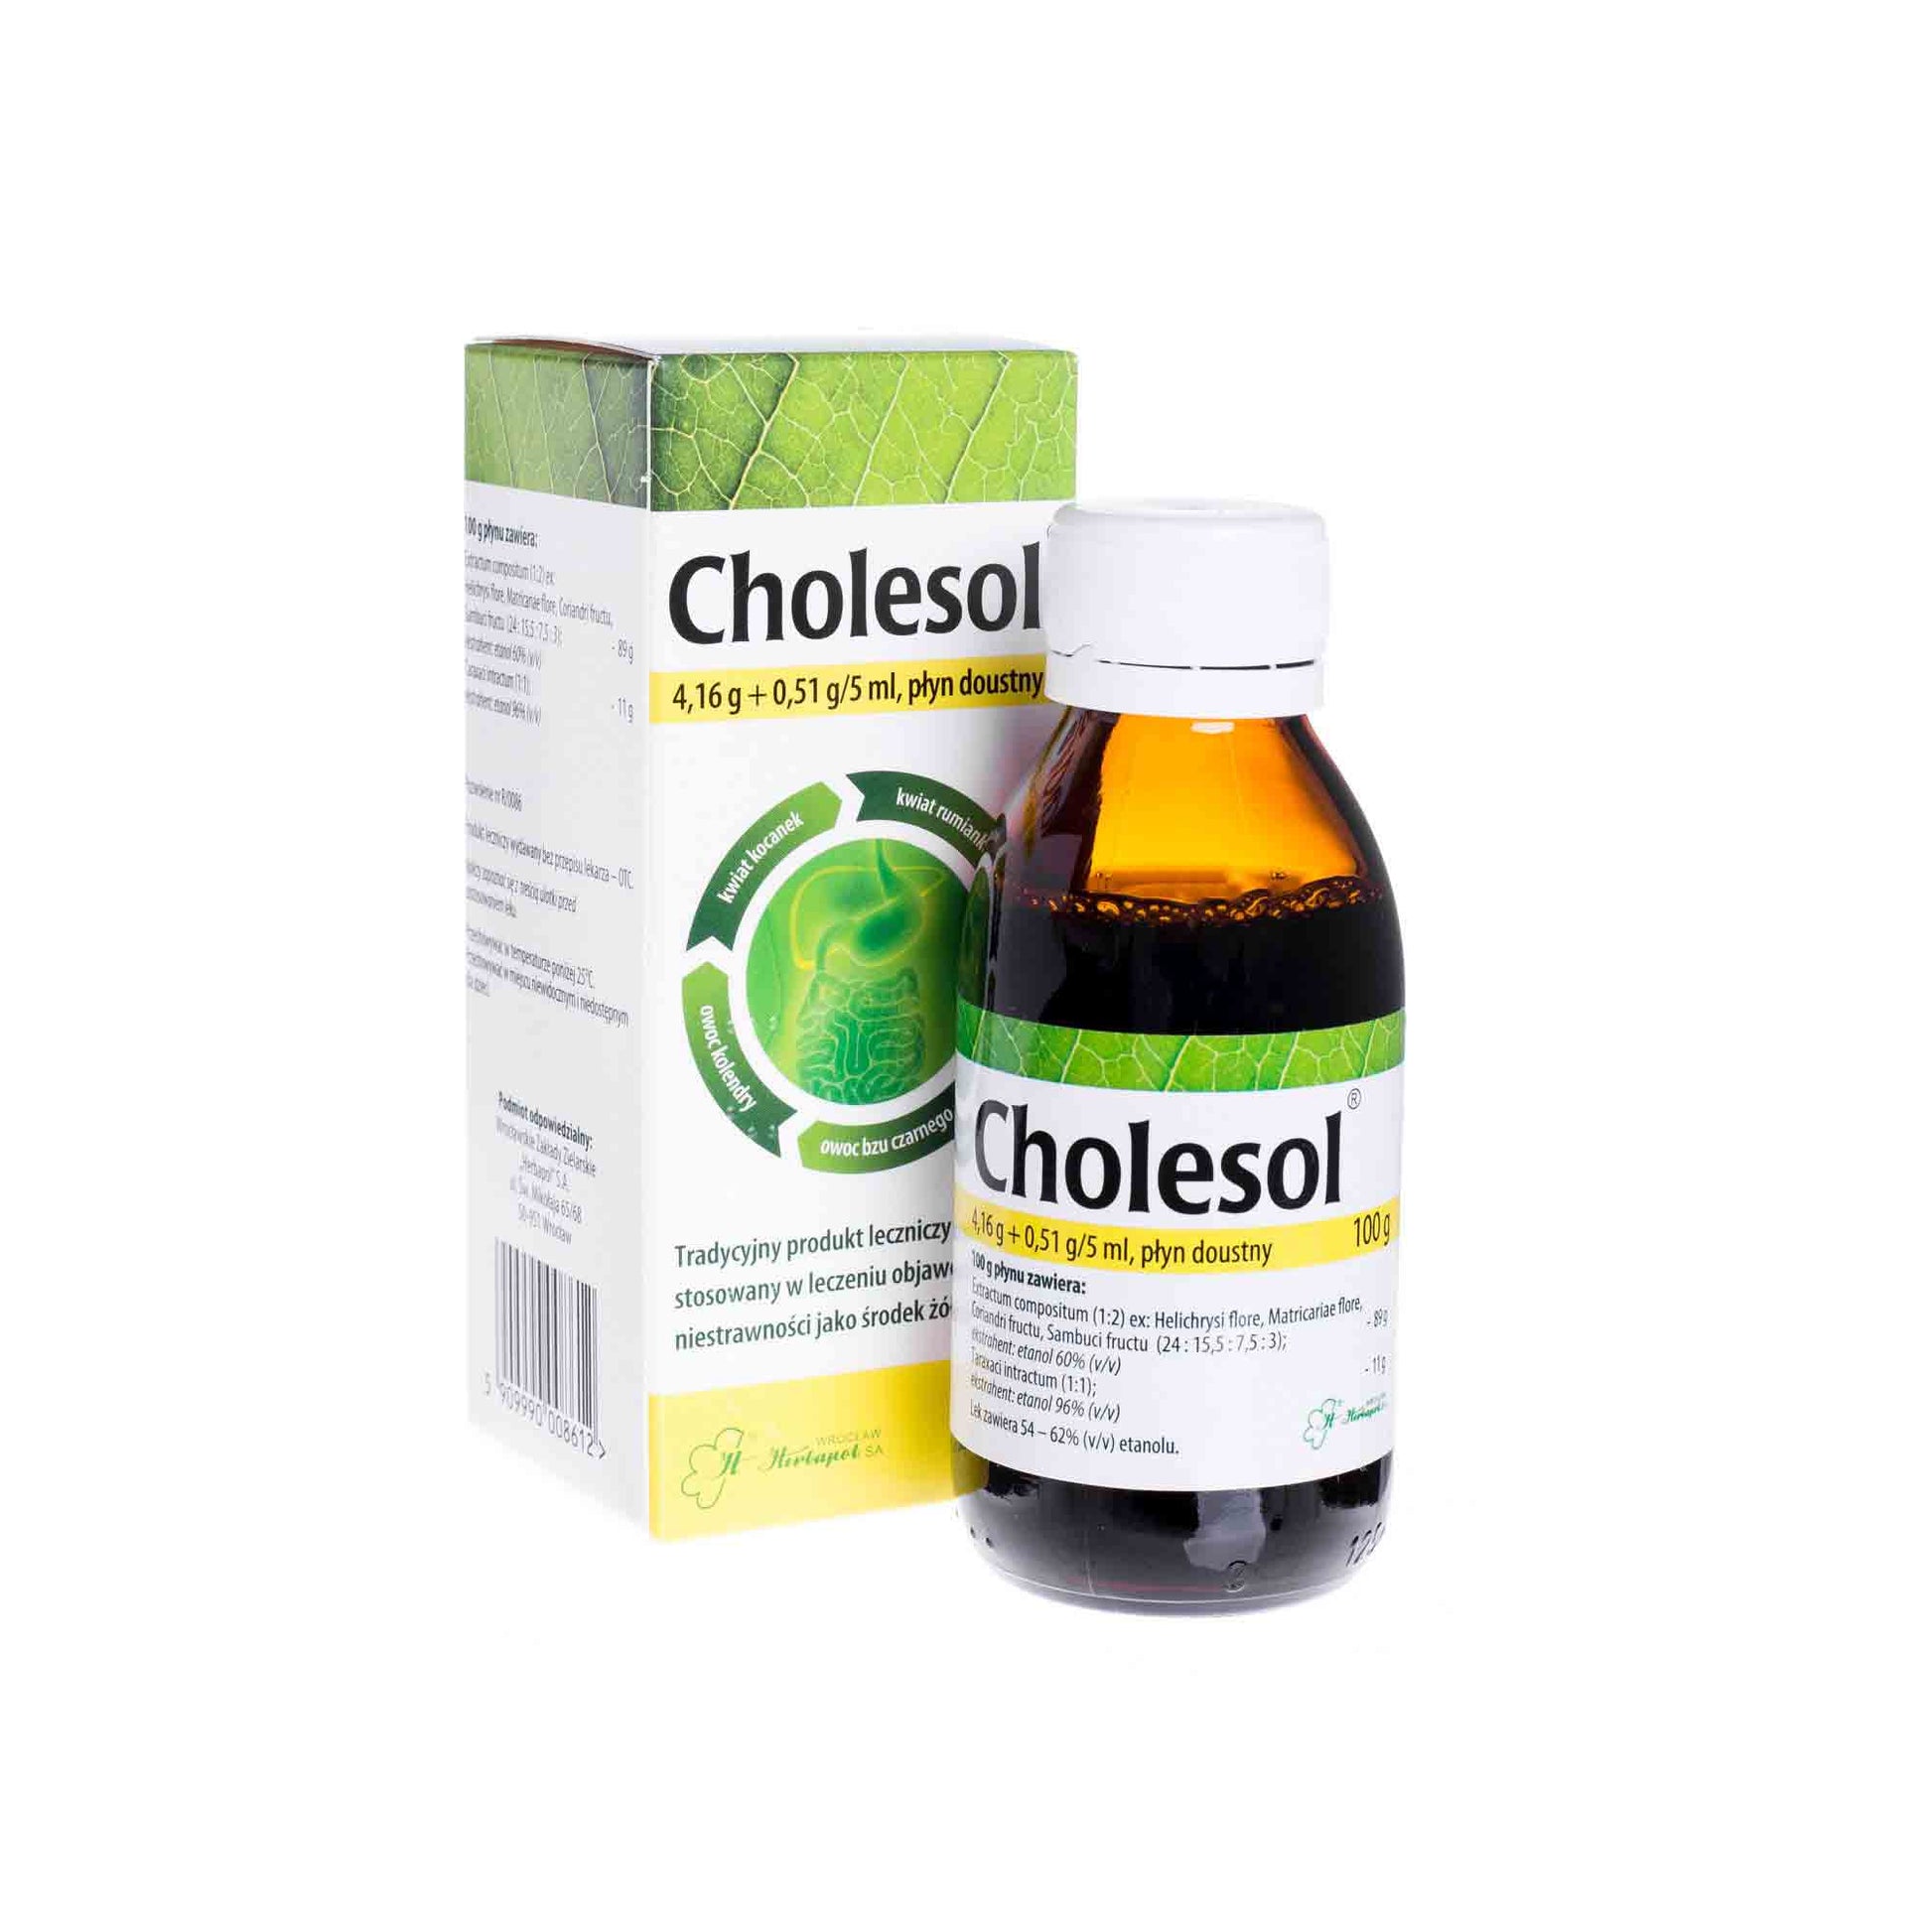 Cholesol liquid